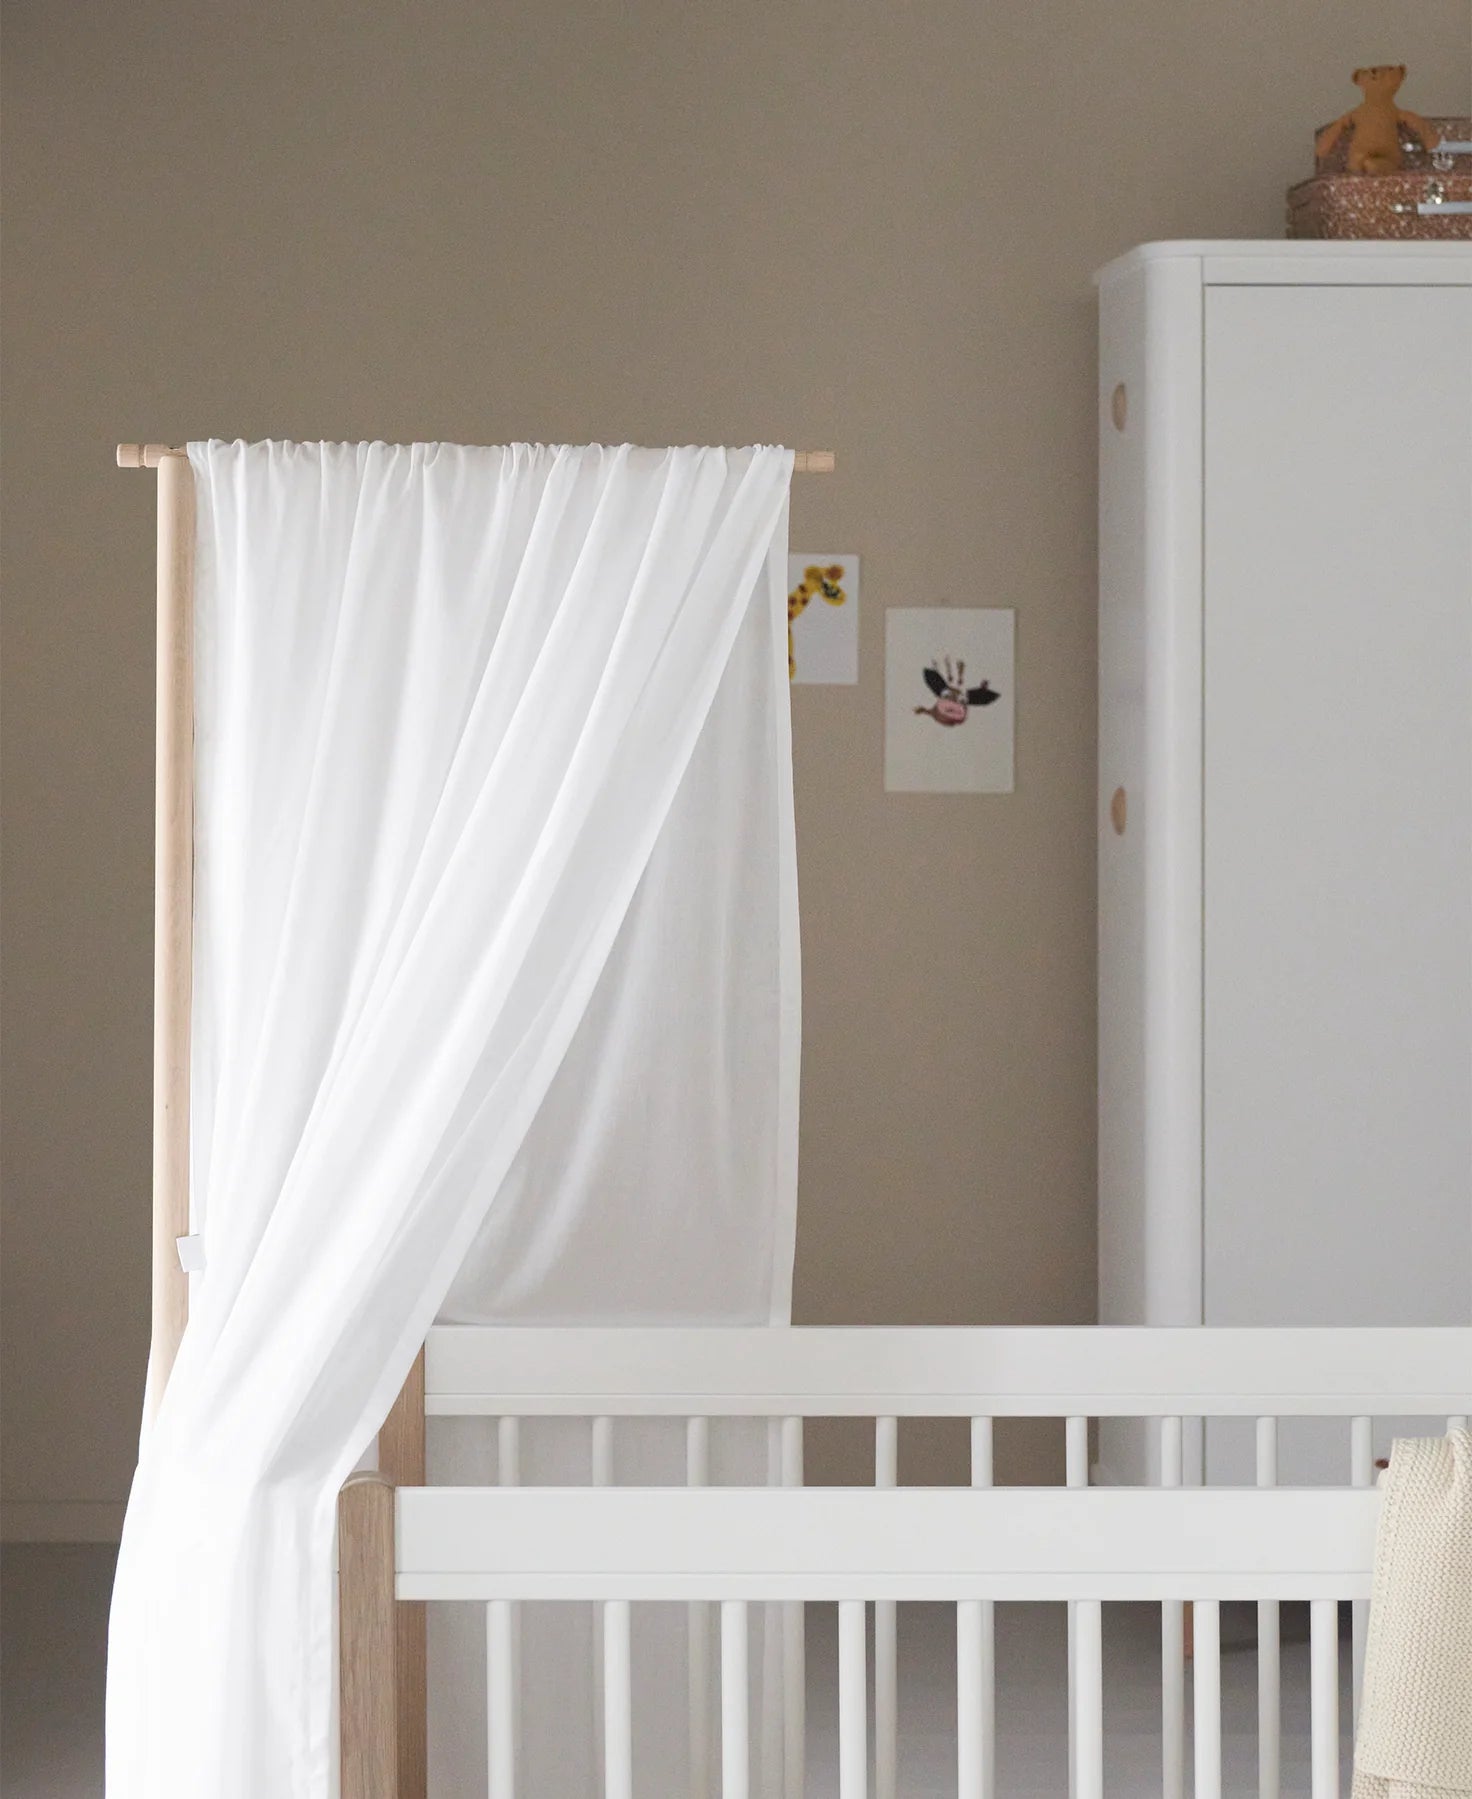 Canopy for Co-sleeper Crib, White